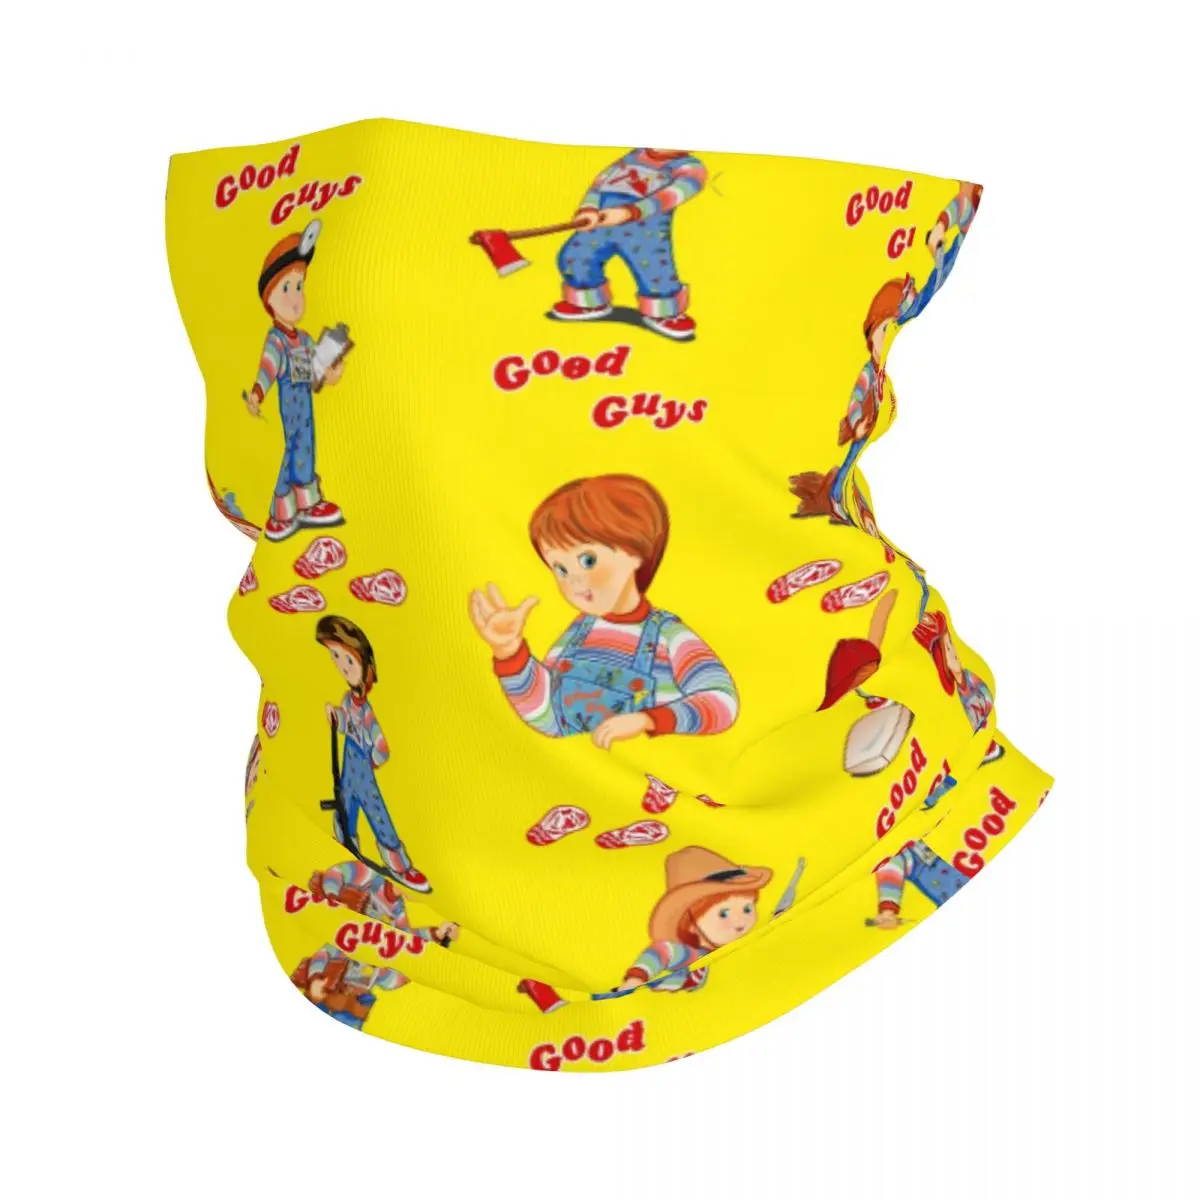 Good Guys Child's Play Bandana Neck Gaiter Printed anime Chucky Balaclavas Mask Scarf Headwear Outdoor Sports Adult Breathable